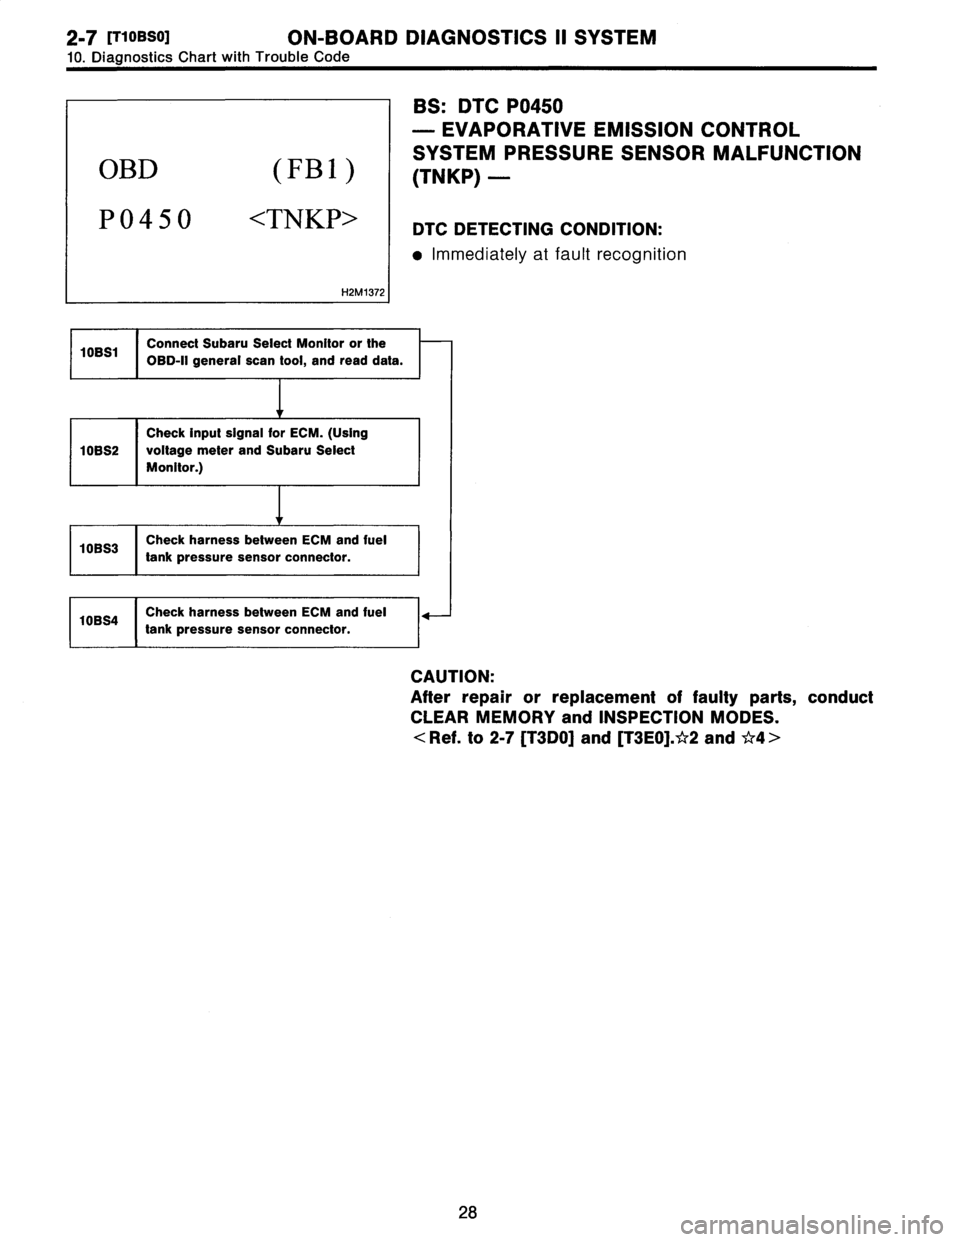 SUBARU LEGACY 1996  Service Repair Manual 2_7
[T10BS0]
ON-BOARD
DIAGNOSTICS
II
SYSTEM

10
.
DiagnosticsChart
with
Trouble
Code

OBD
(FBI)

P0450
<TNKP>
H2M1372

BS
:
DTC
P0450

-
EVAPORATIVE
EMISSION
CONTROL

SYSTEM
PRESSURE
SENSOR
MALFUNCTIO